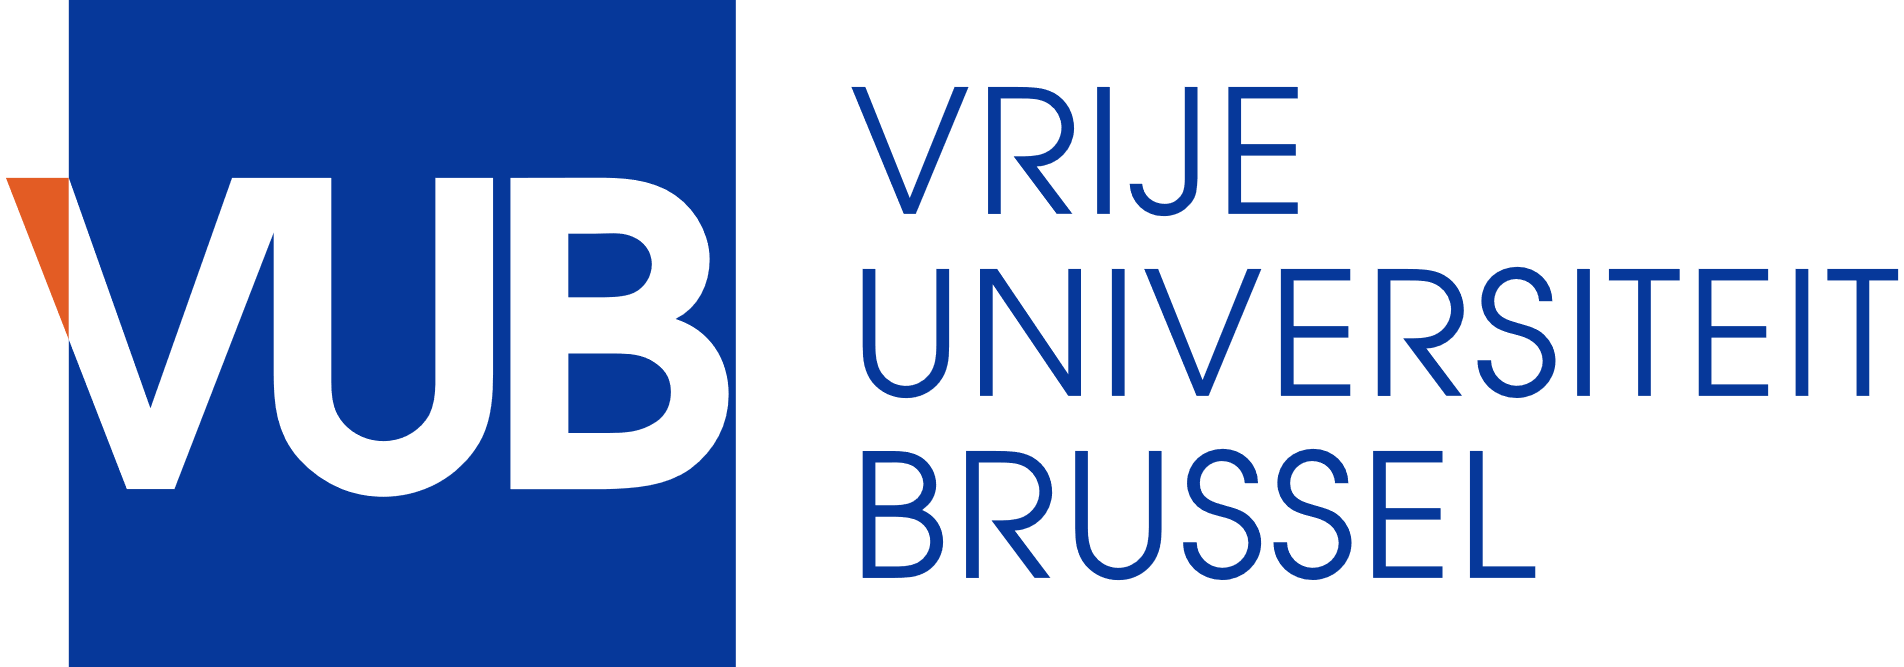 Third Place Europe - Vrije Universiteit Brussels